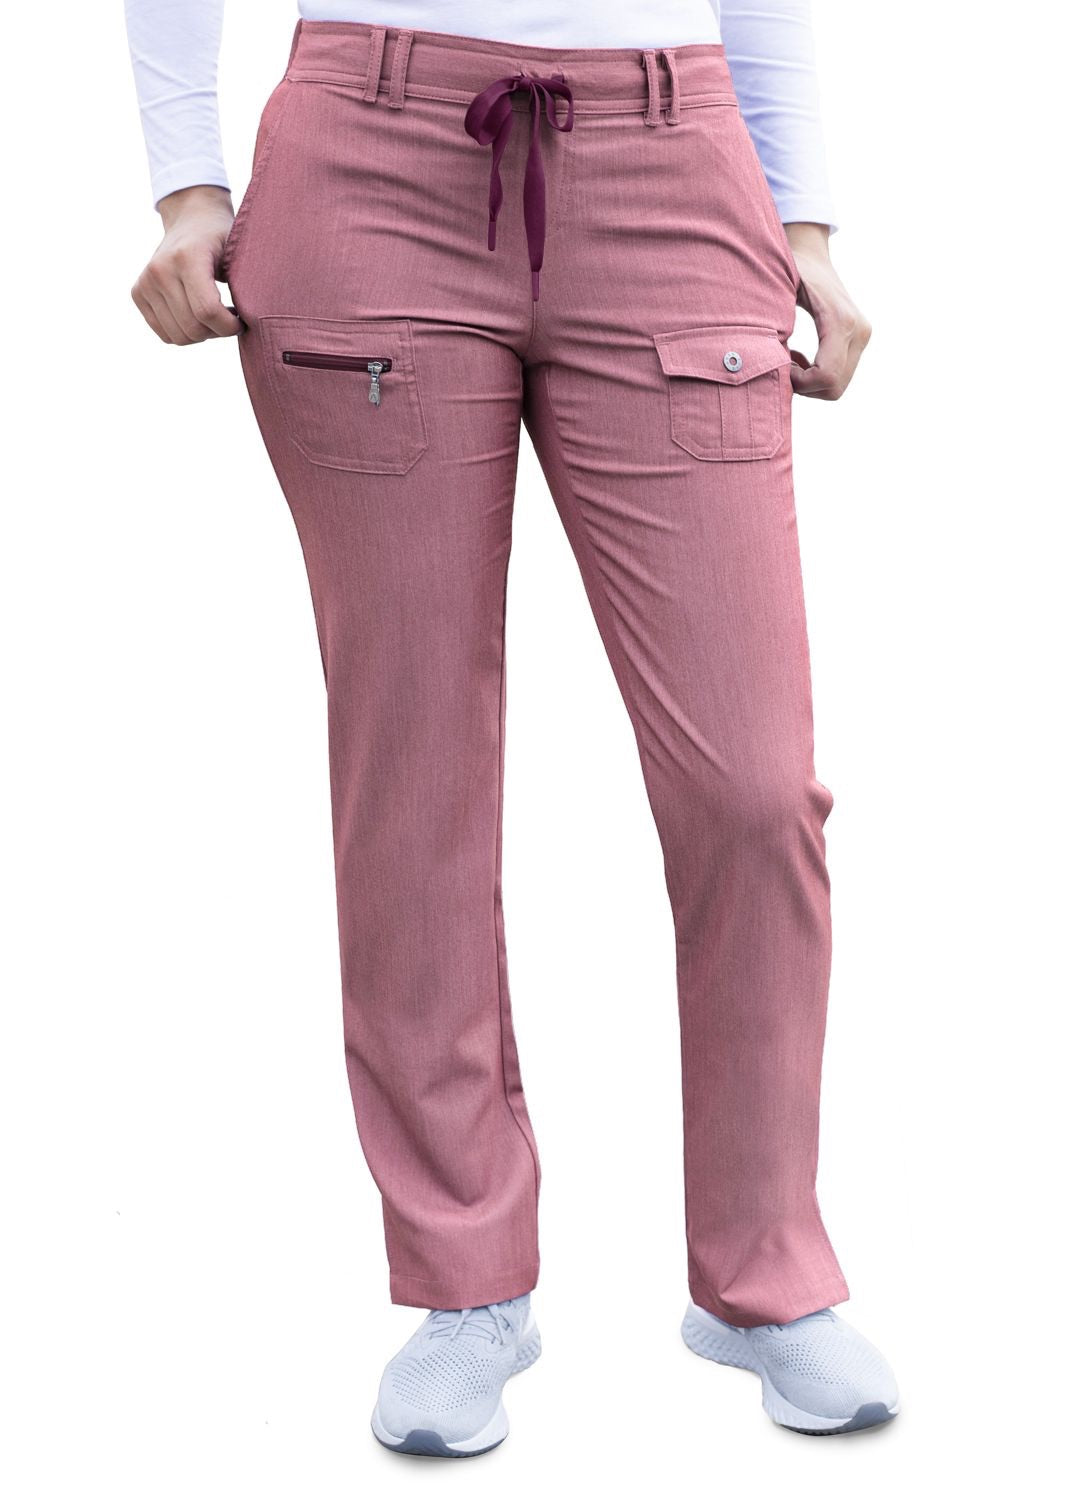 Pro Heather Slim Fit 6 Pocket Scrubs Pant by Adar XXS-3XL (Tall) / HEATHER WINE